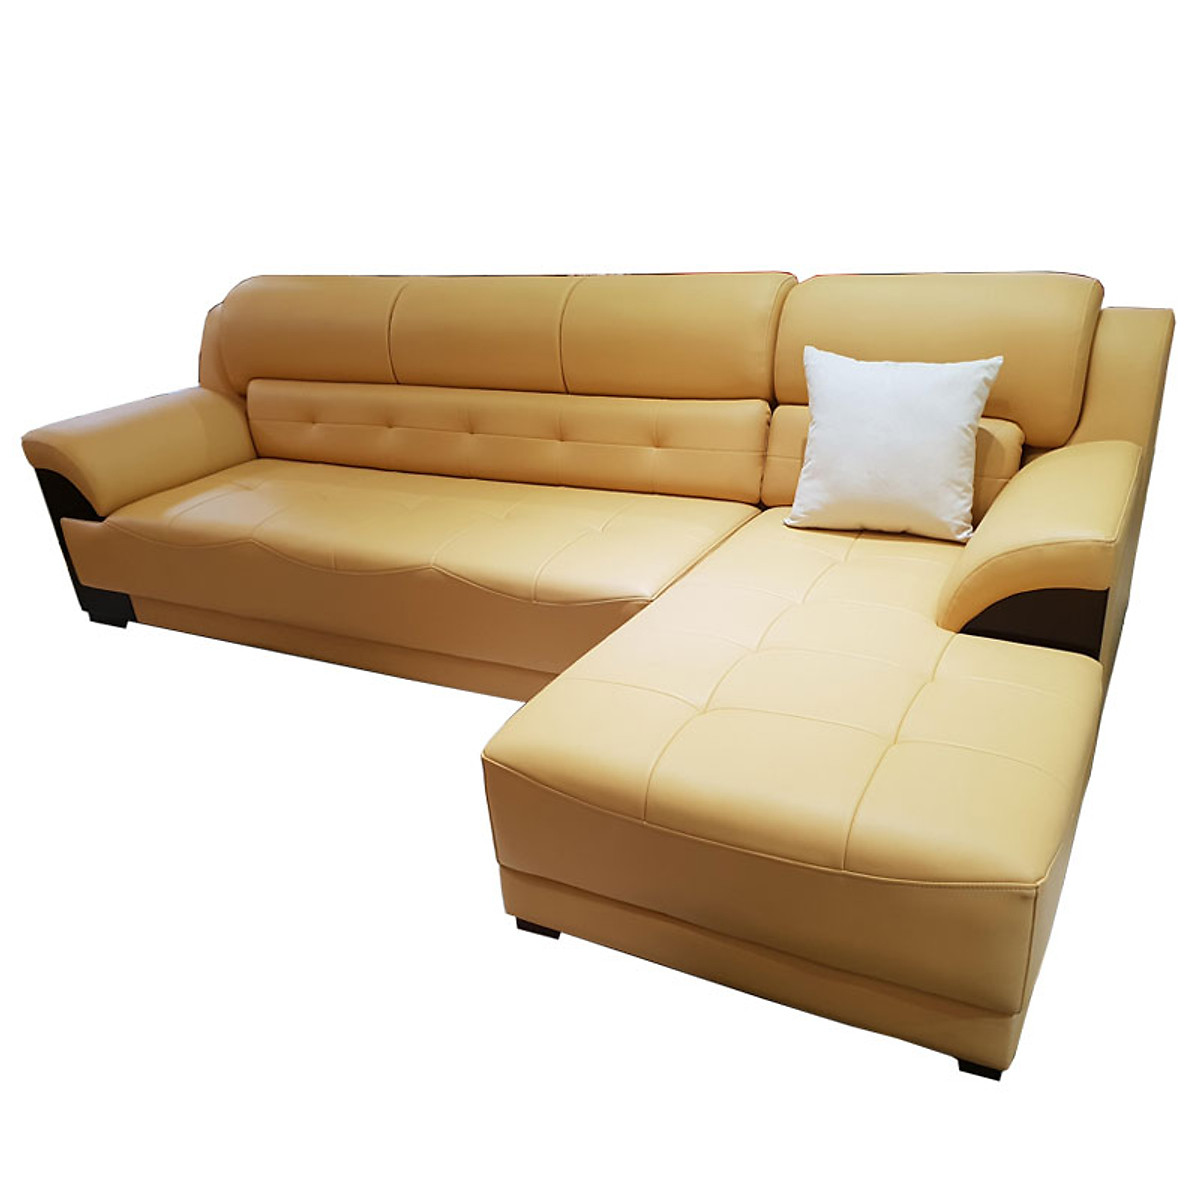 Sofa da góc L Tundo 2m7 x 1m6 màu kem đậm nệm rút